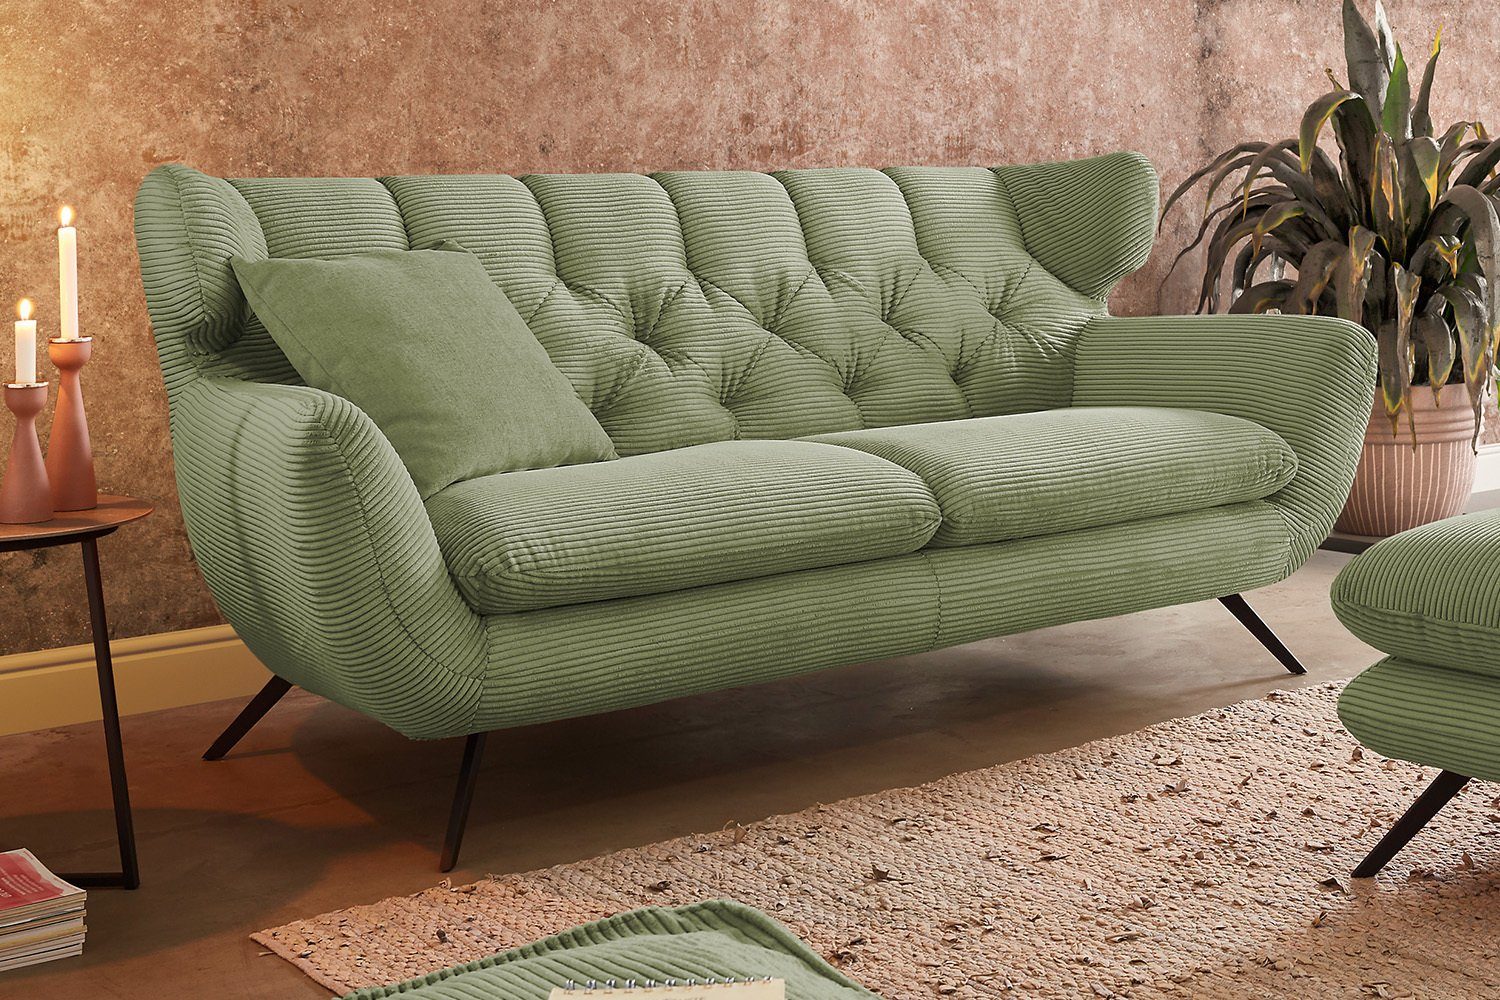 Sitzgruppe 3-tlg), olivgrün versch. Farben CHARME, Cord KAWOLA (Set, Hockerbank Sessel Sofa